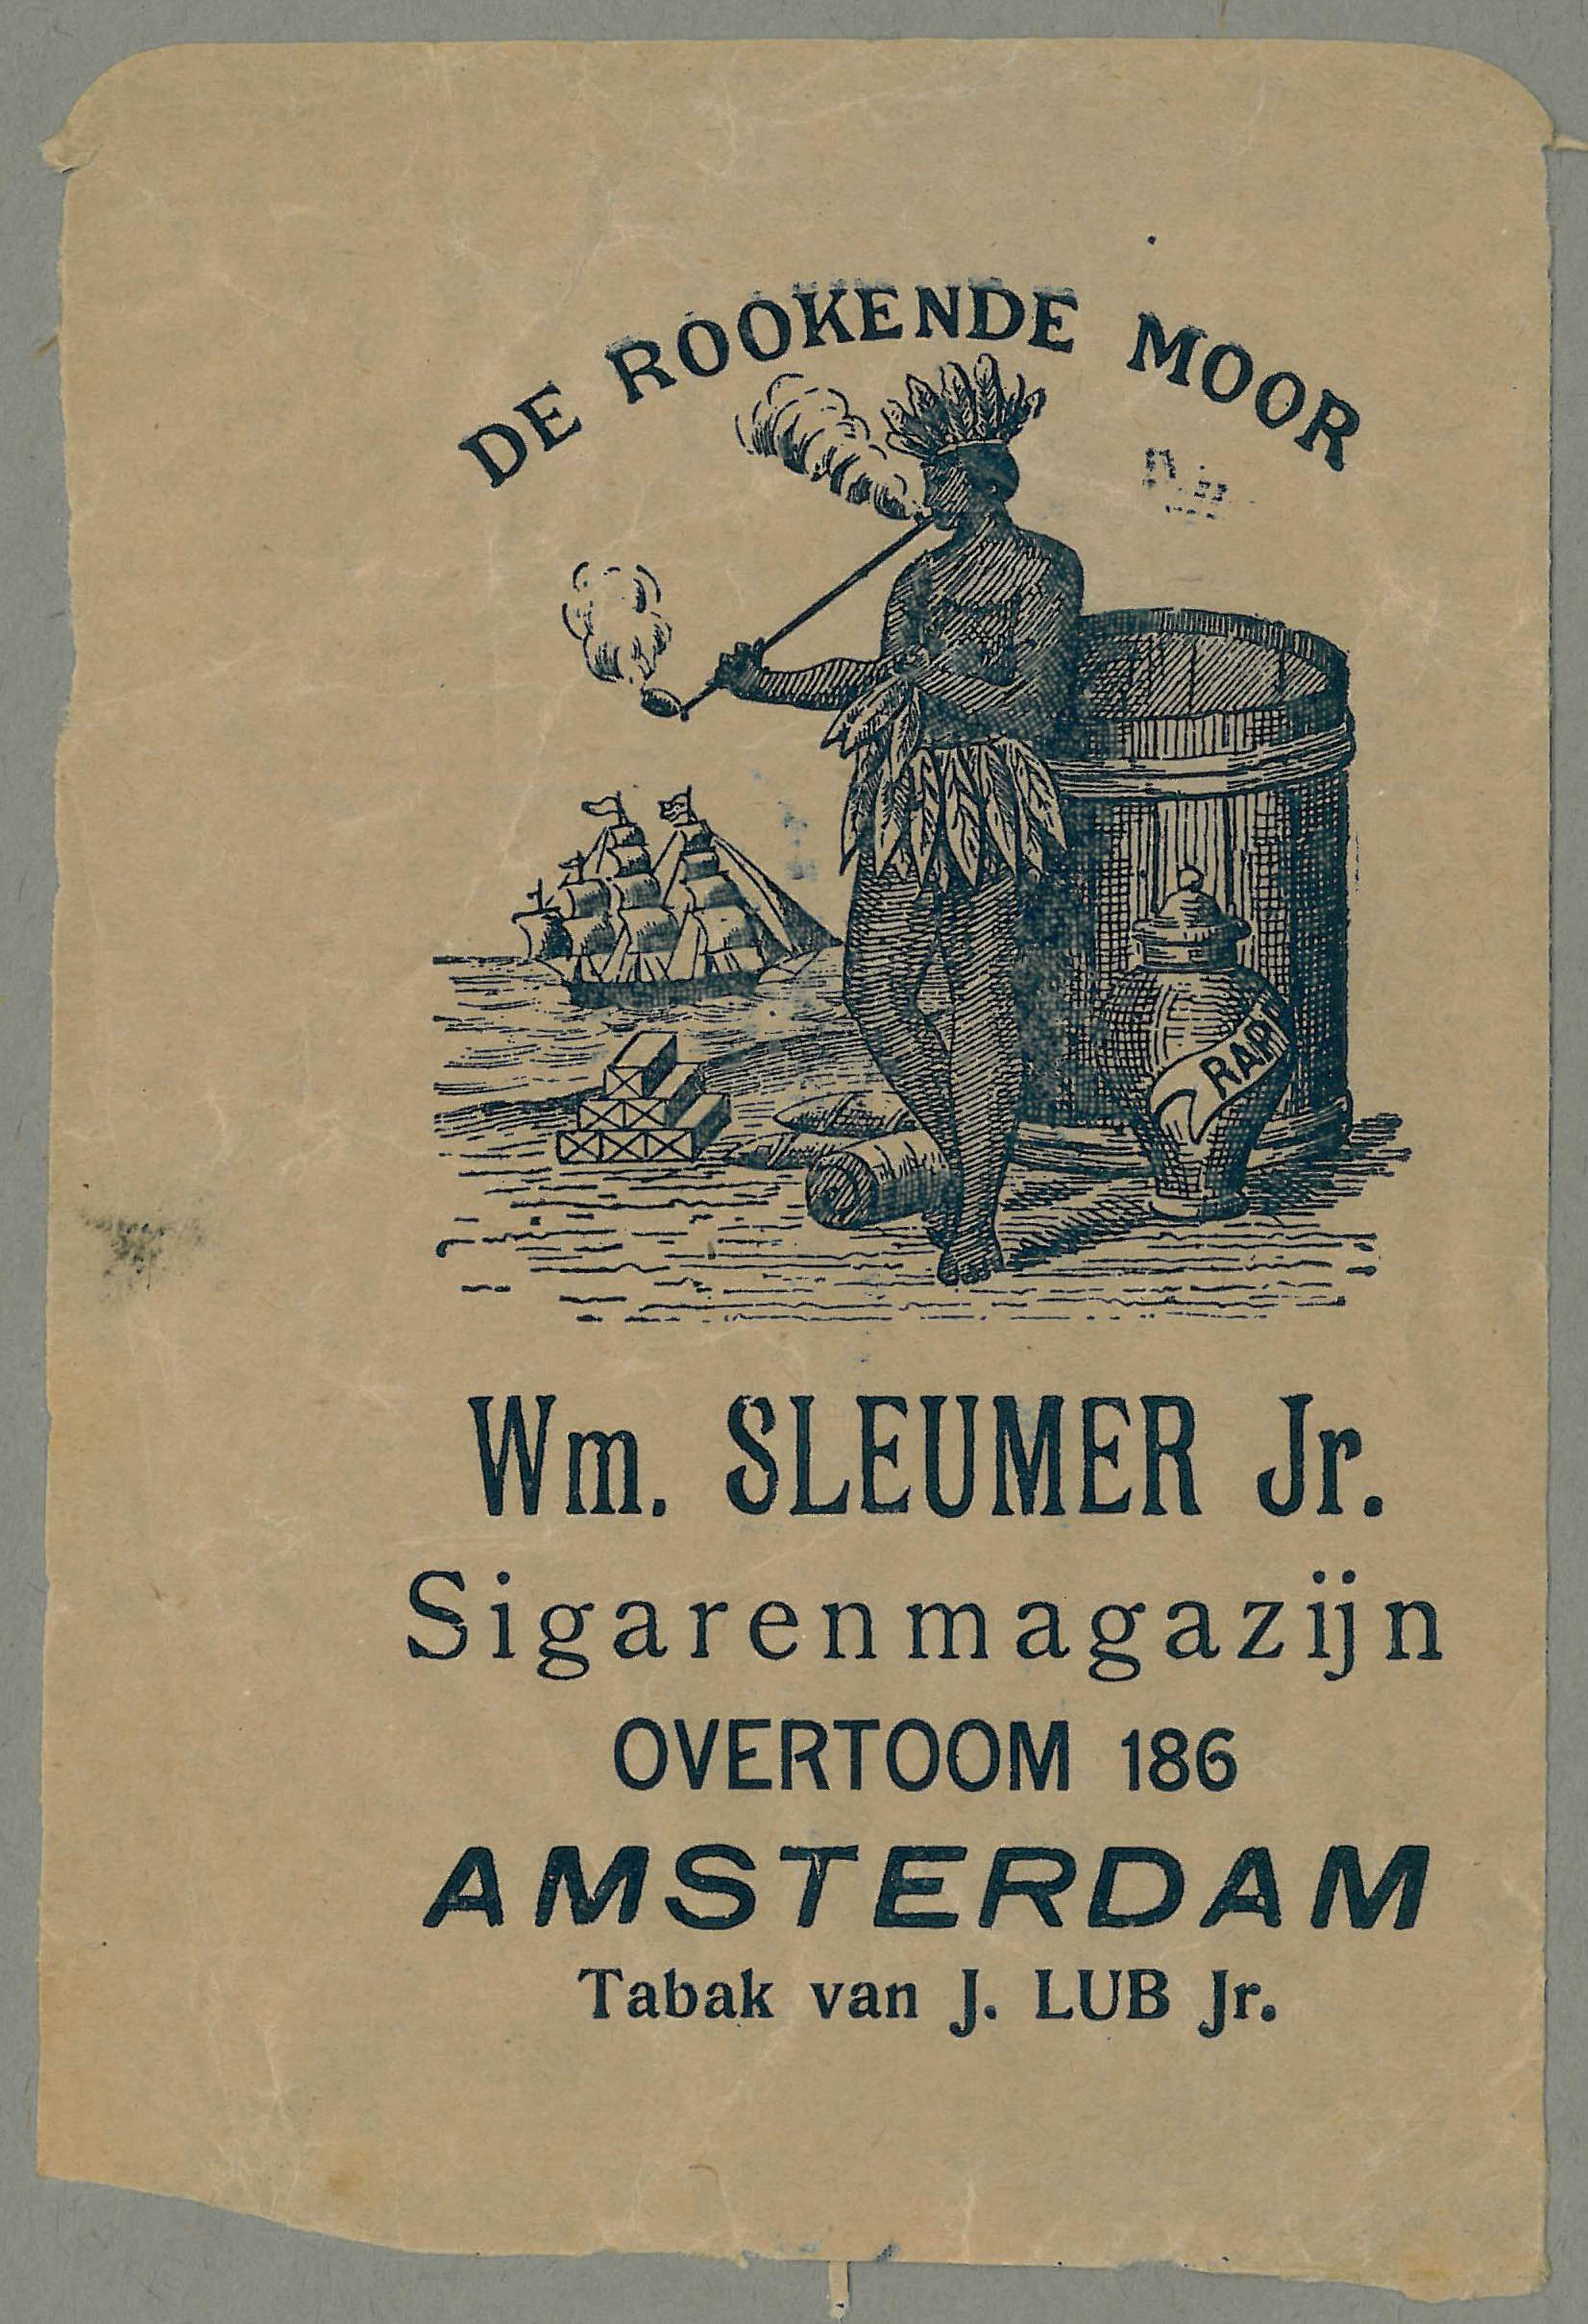 12-26.693-amsterdam-cigar-bag-moriaan-amsterdam